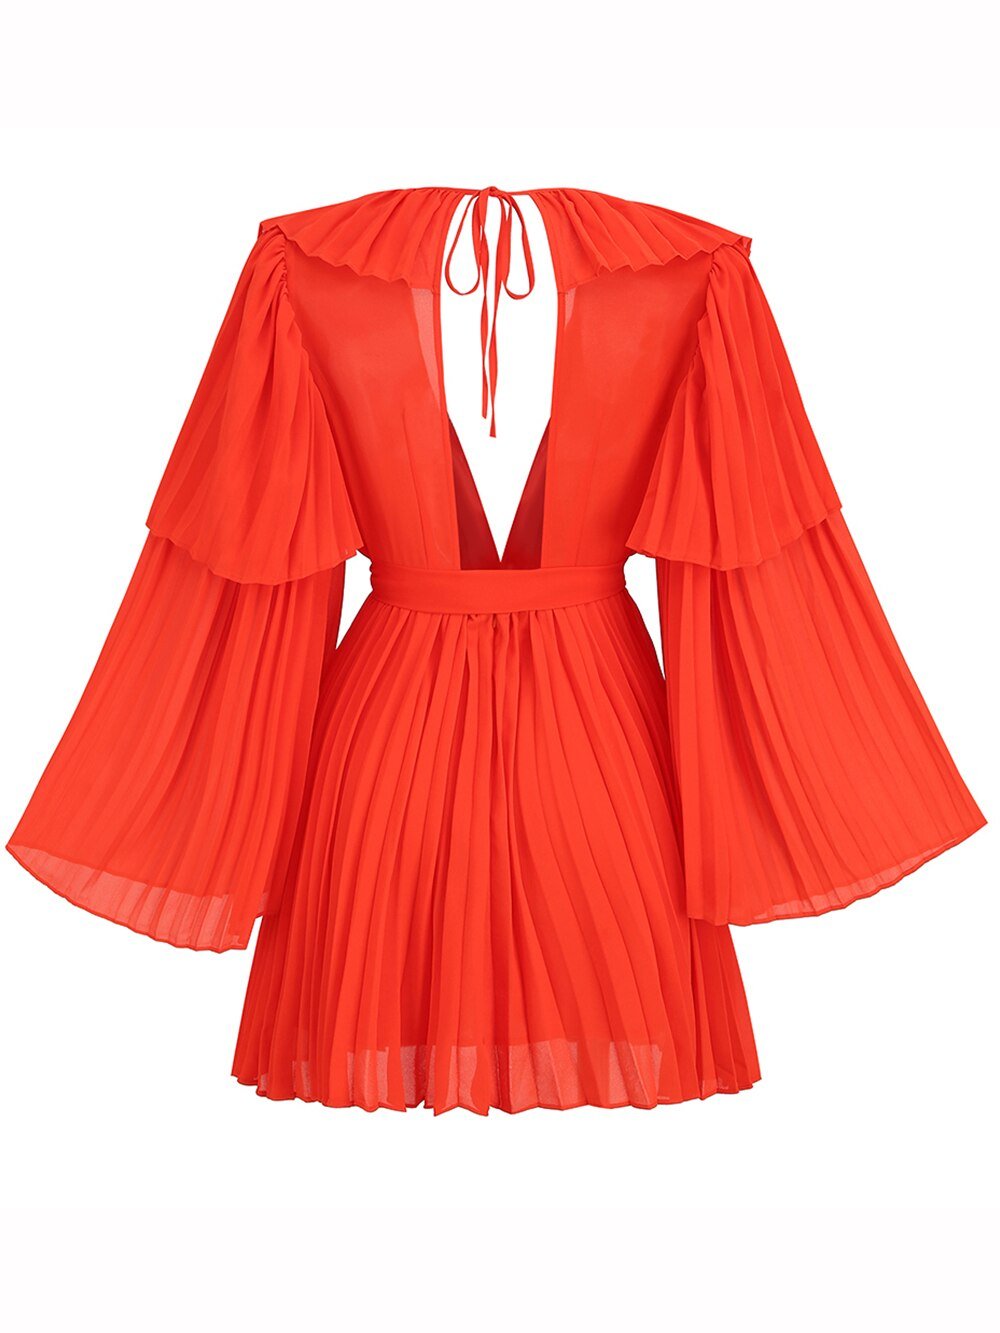 Bright Orange Pleated Dress - Kelly Obi New York